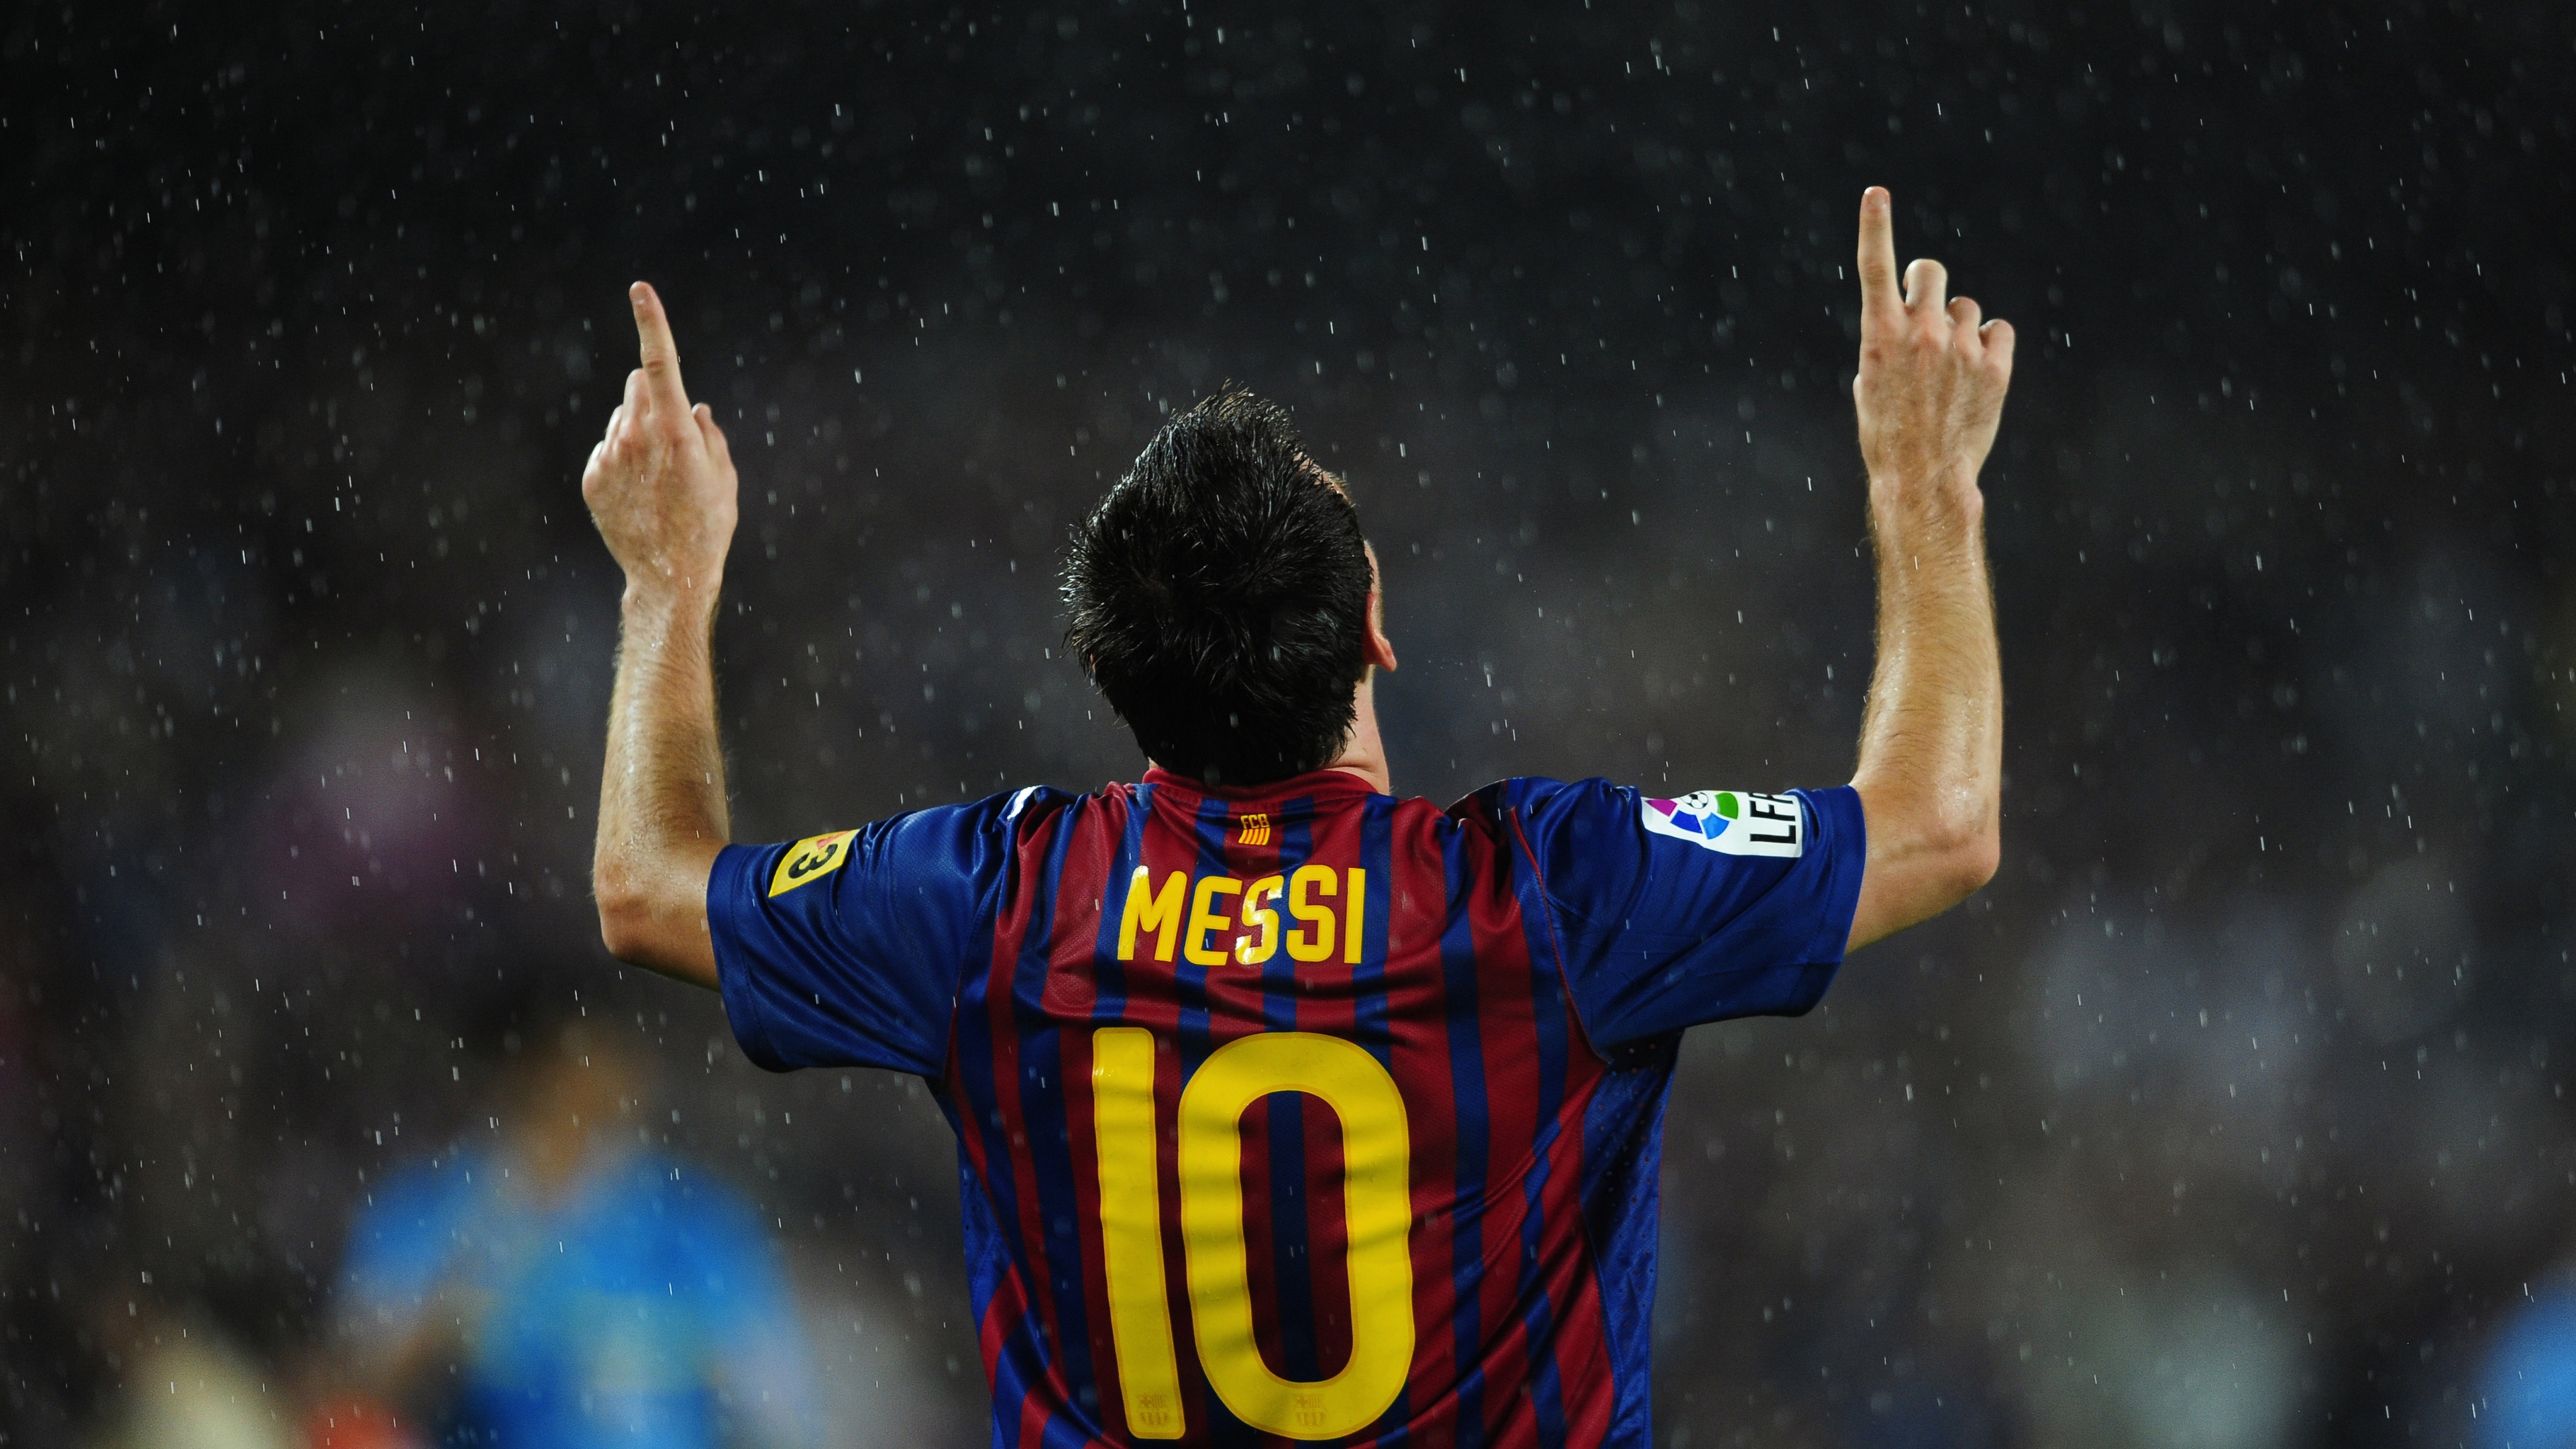 Lionel Messi in Rain for 3840 x 2160 Ultra HD resolution